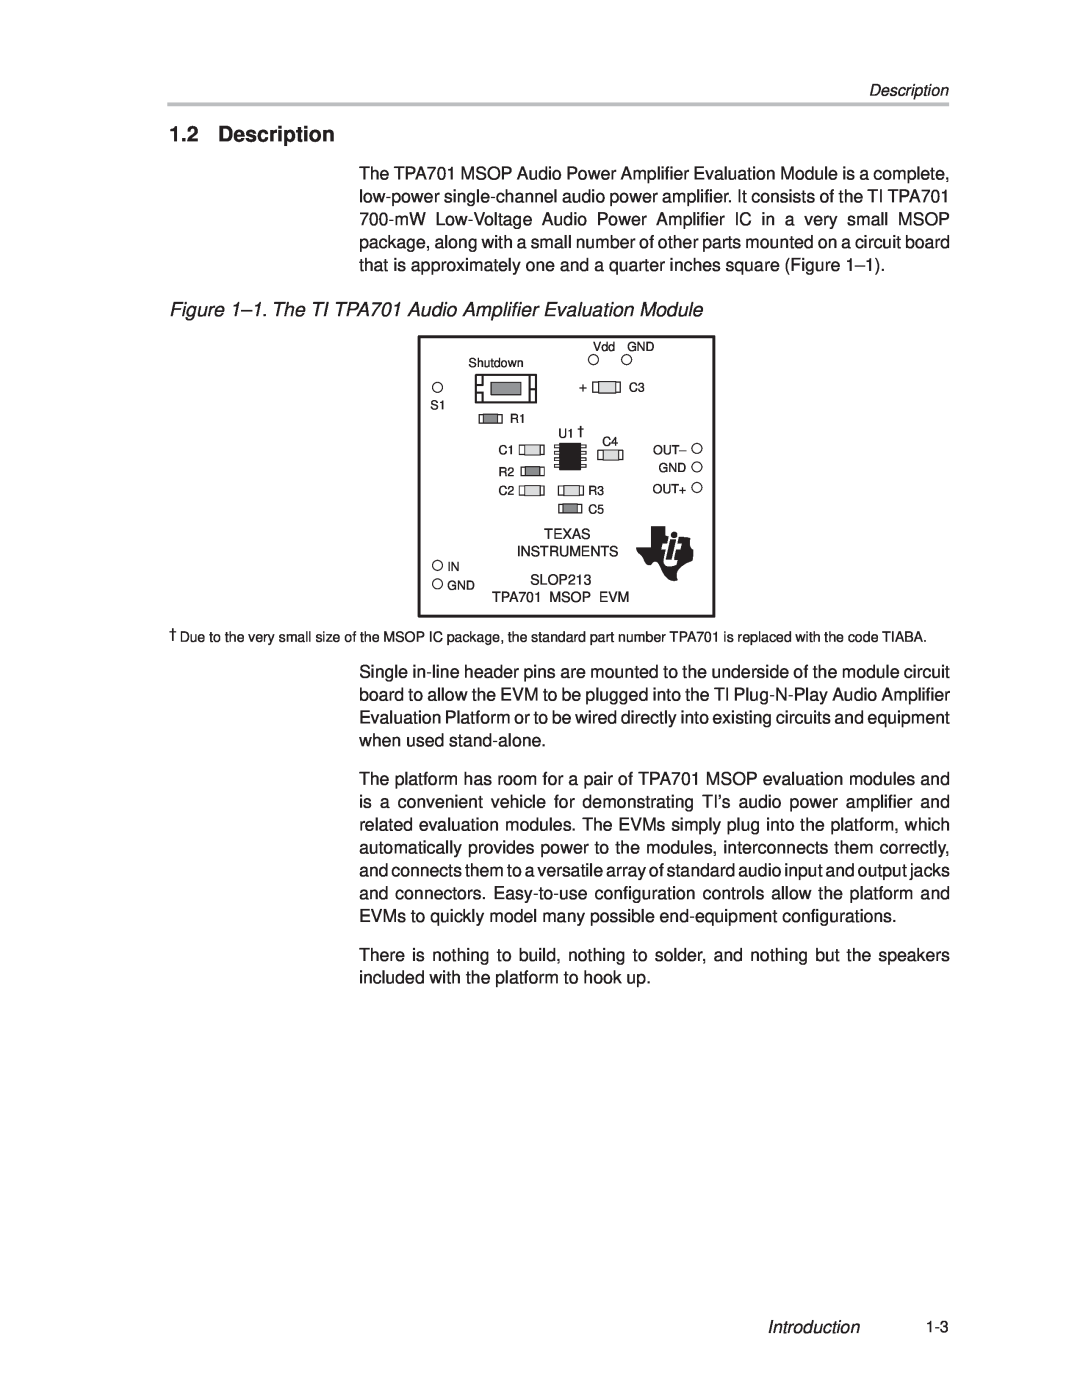 Texas Instruments TPA701 manual Description, Introduction 